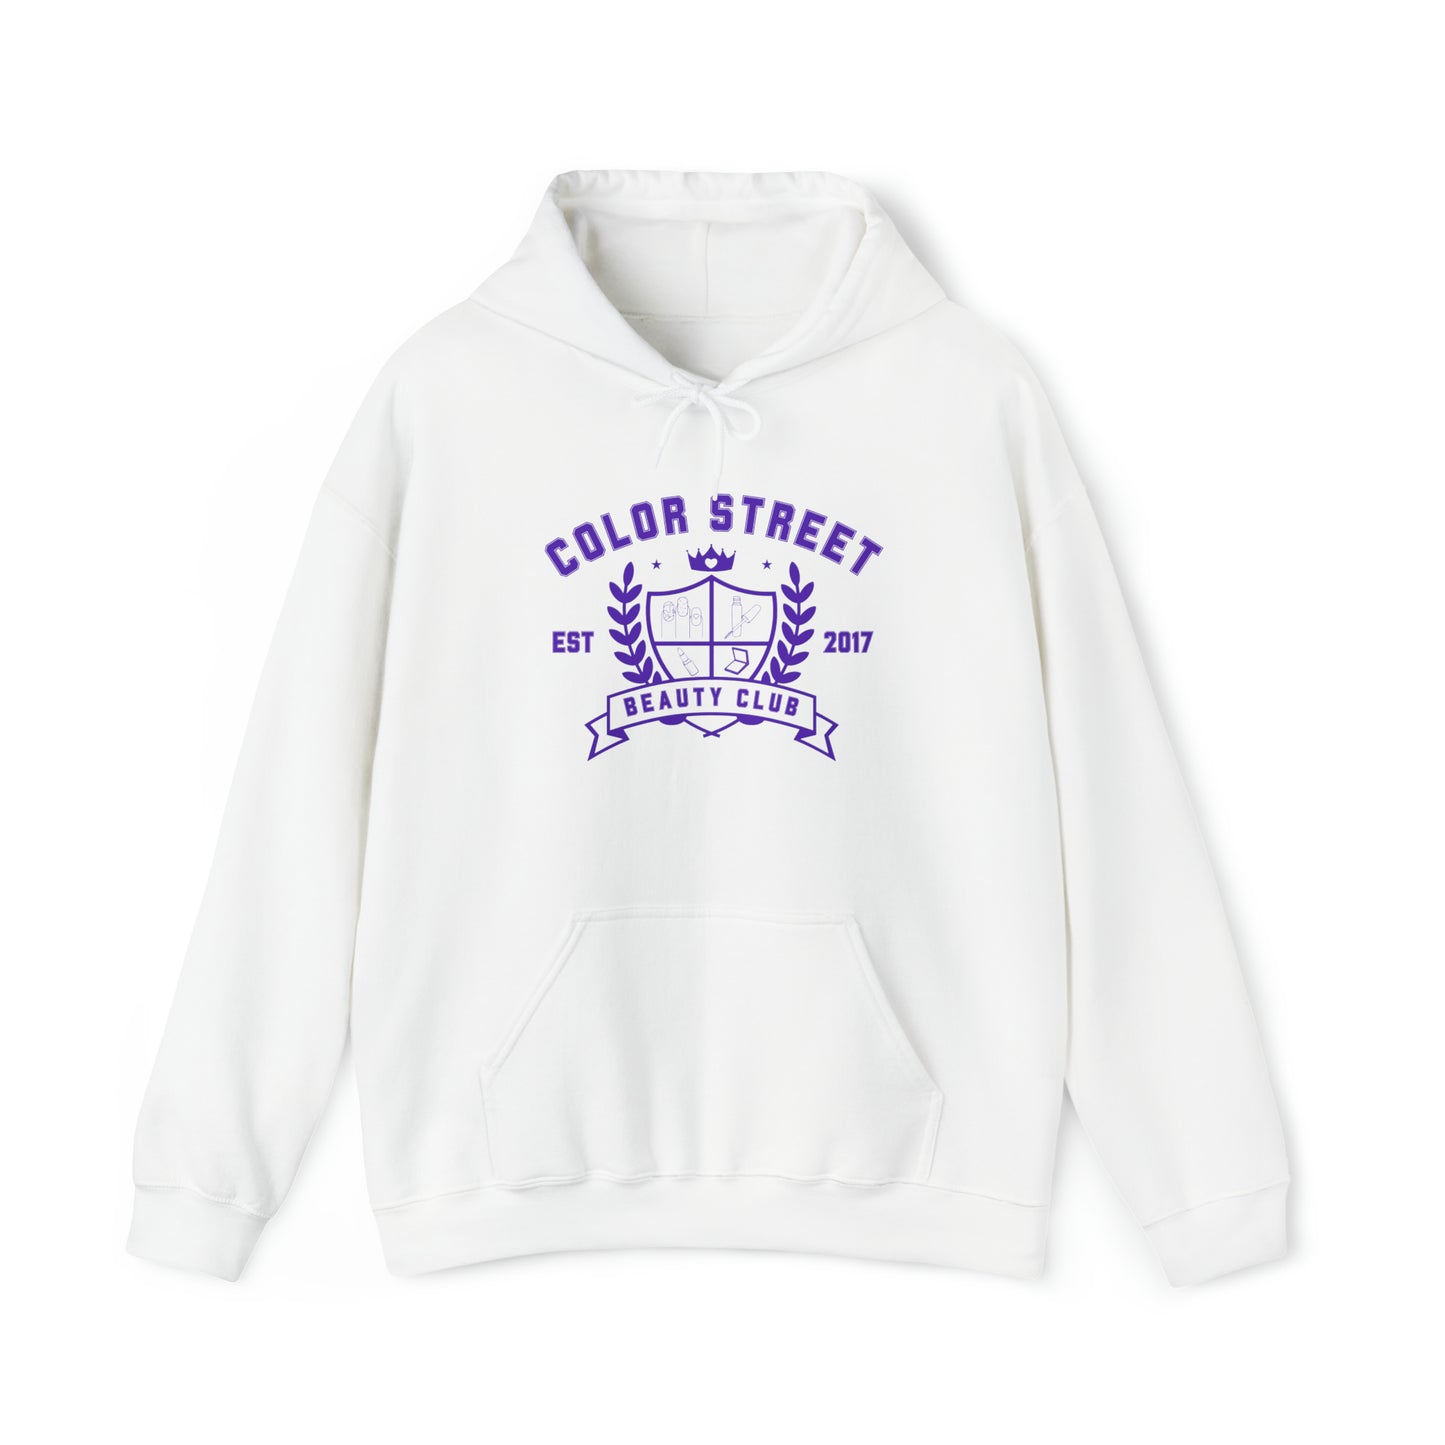 CS Beauty Club Hooded Sweatshirt